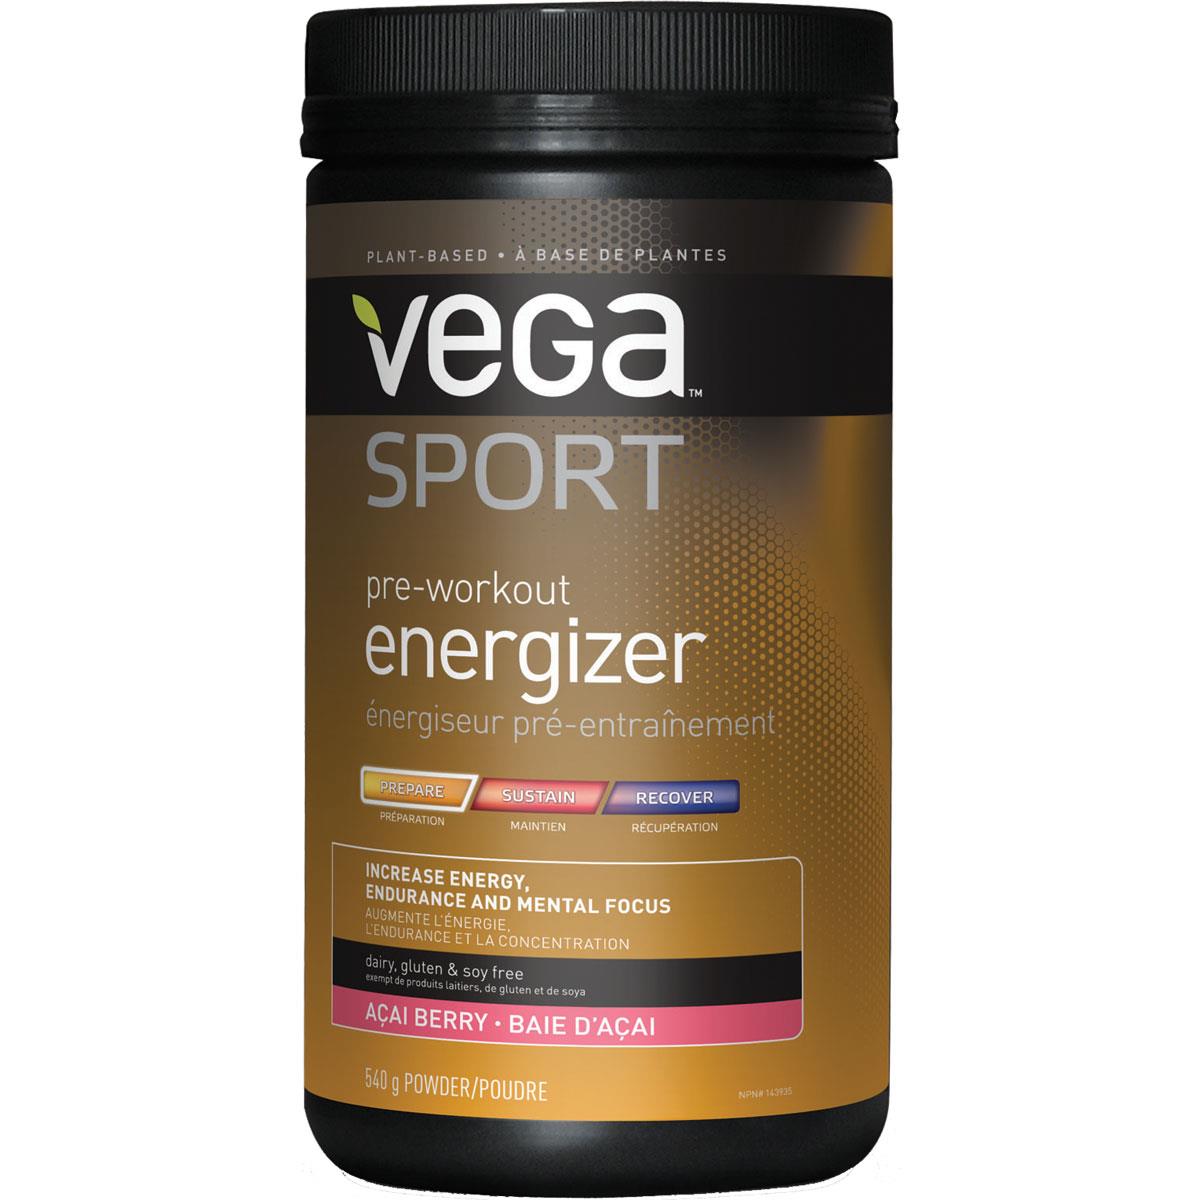 Vega Sport Pre-workout Energizer (Acai Berry) - 540g - Homegrown Foods, Stony Plain